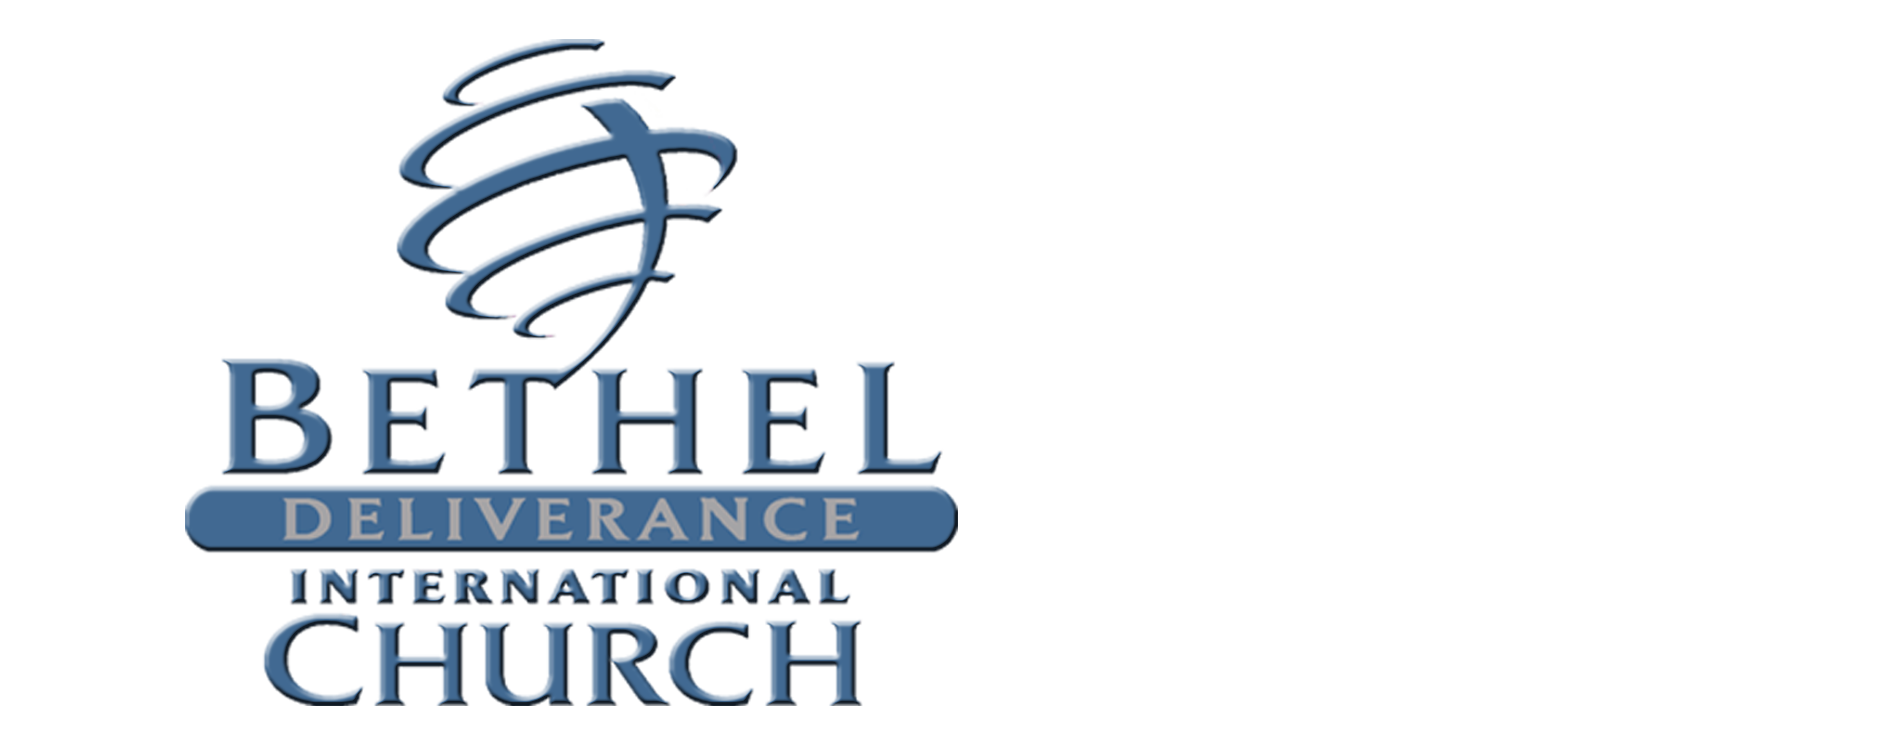 Bethel Deliverance International Church Logo